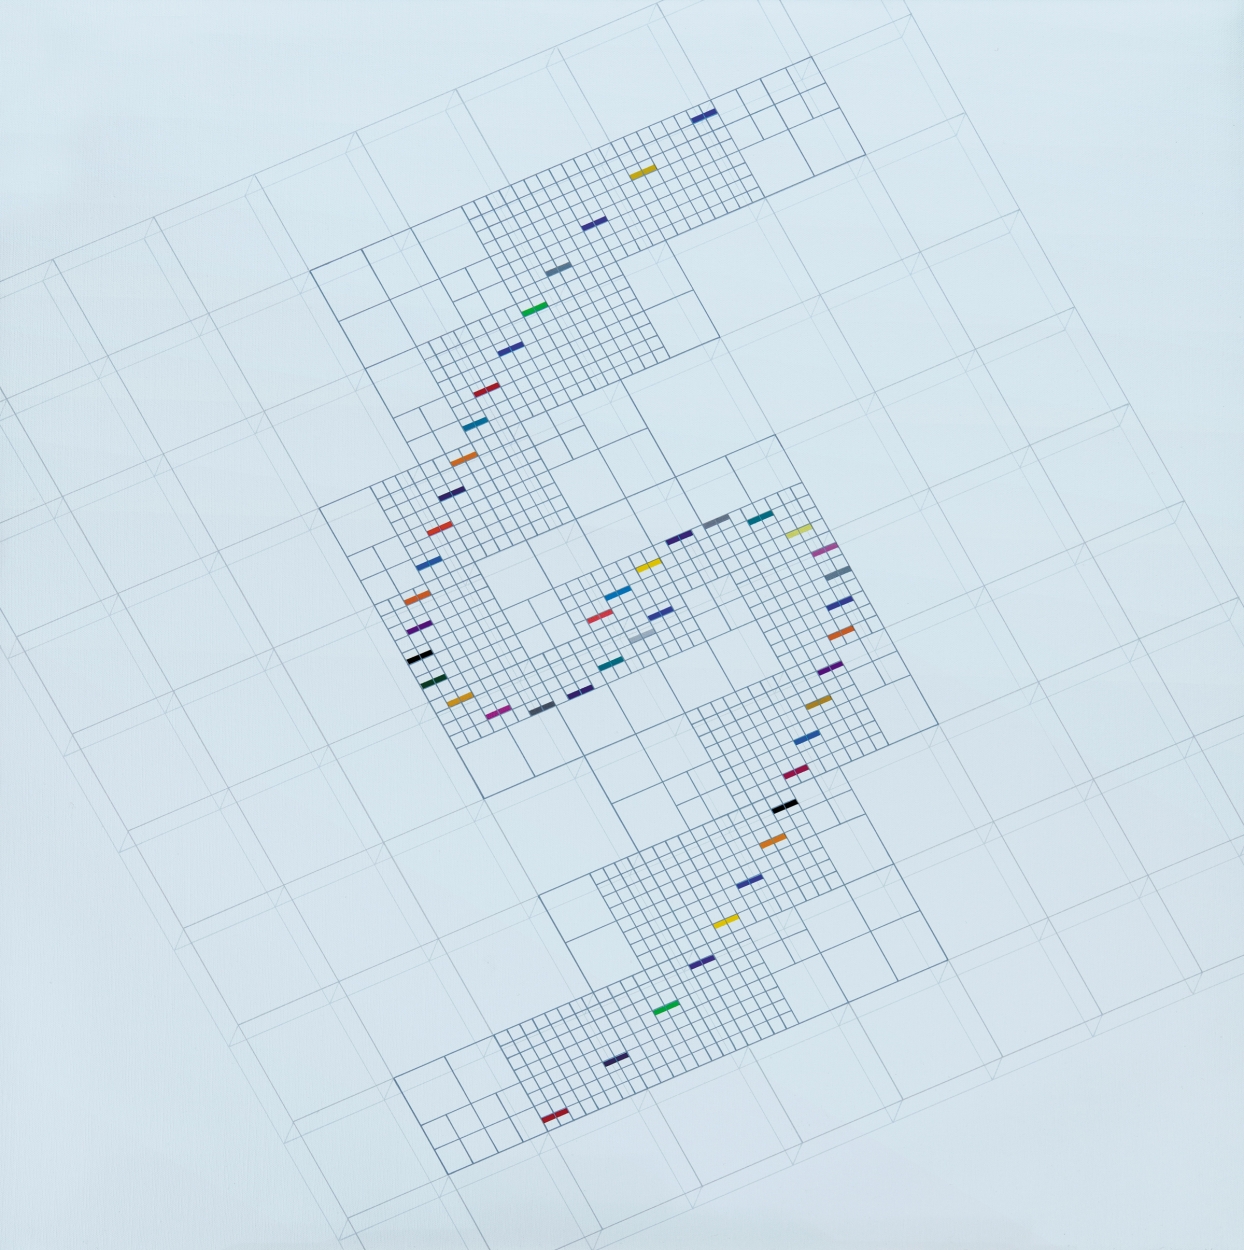  Ottó László: Spiral-by-squares, 2021